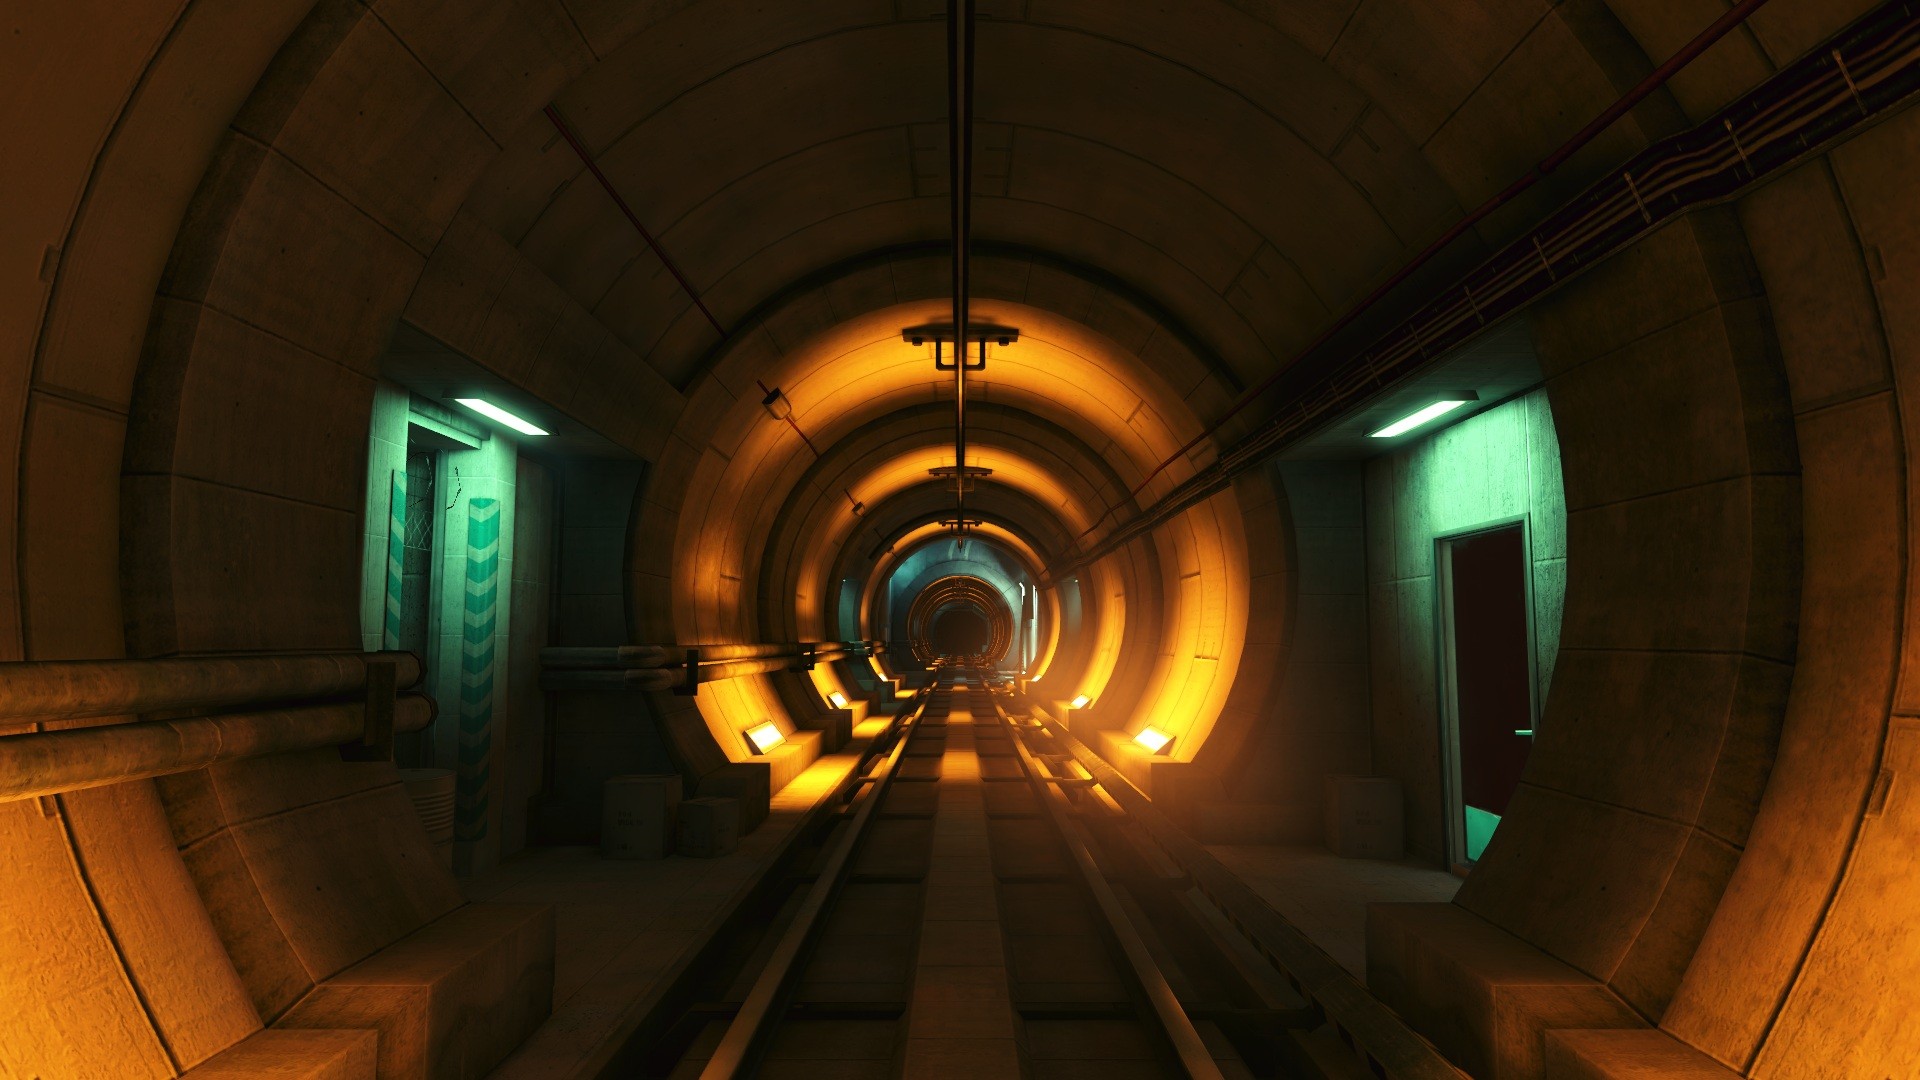 General 1920x1080 Mirror's Edge screen shot video games tunnel underground railway orange pipes PC gaming